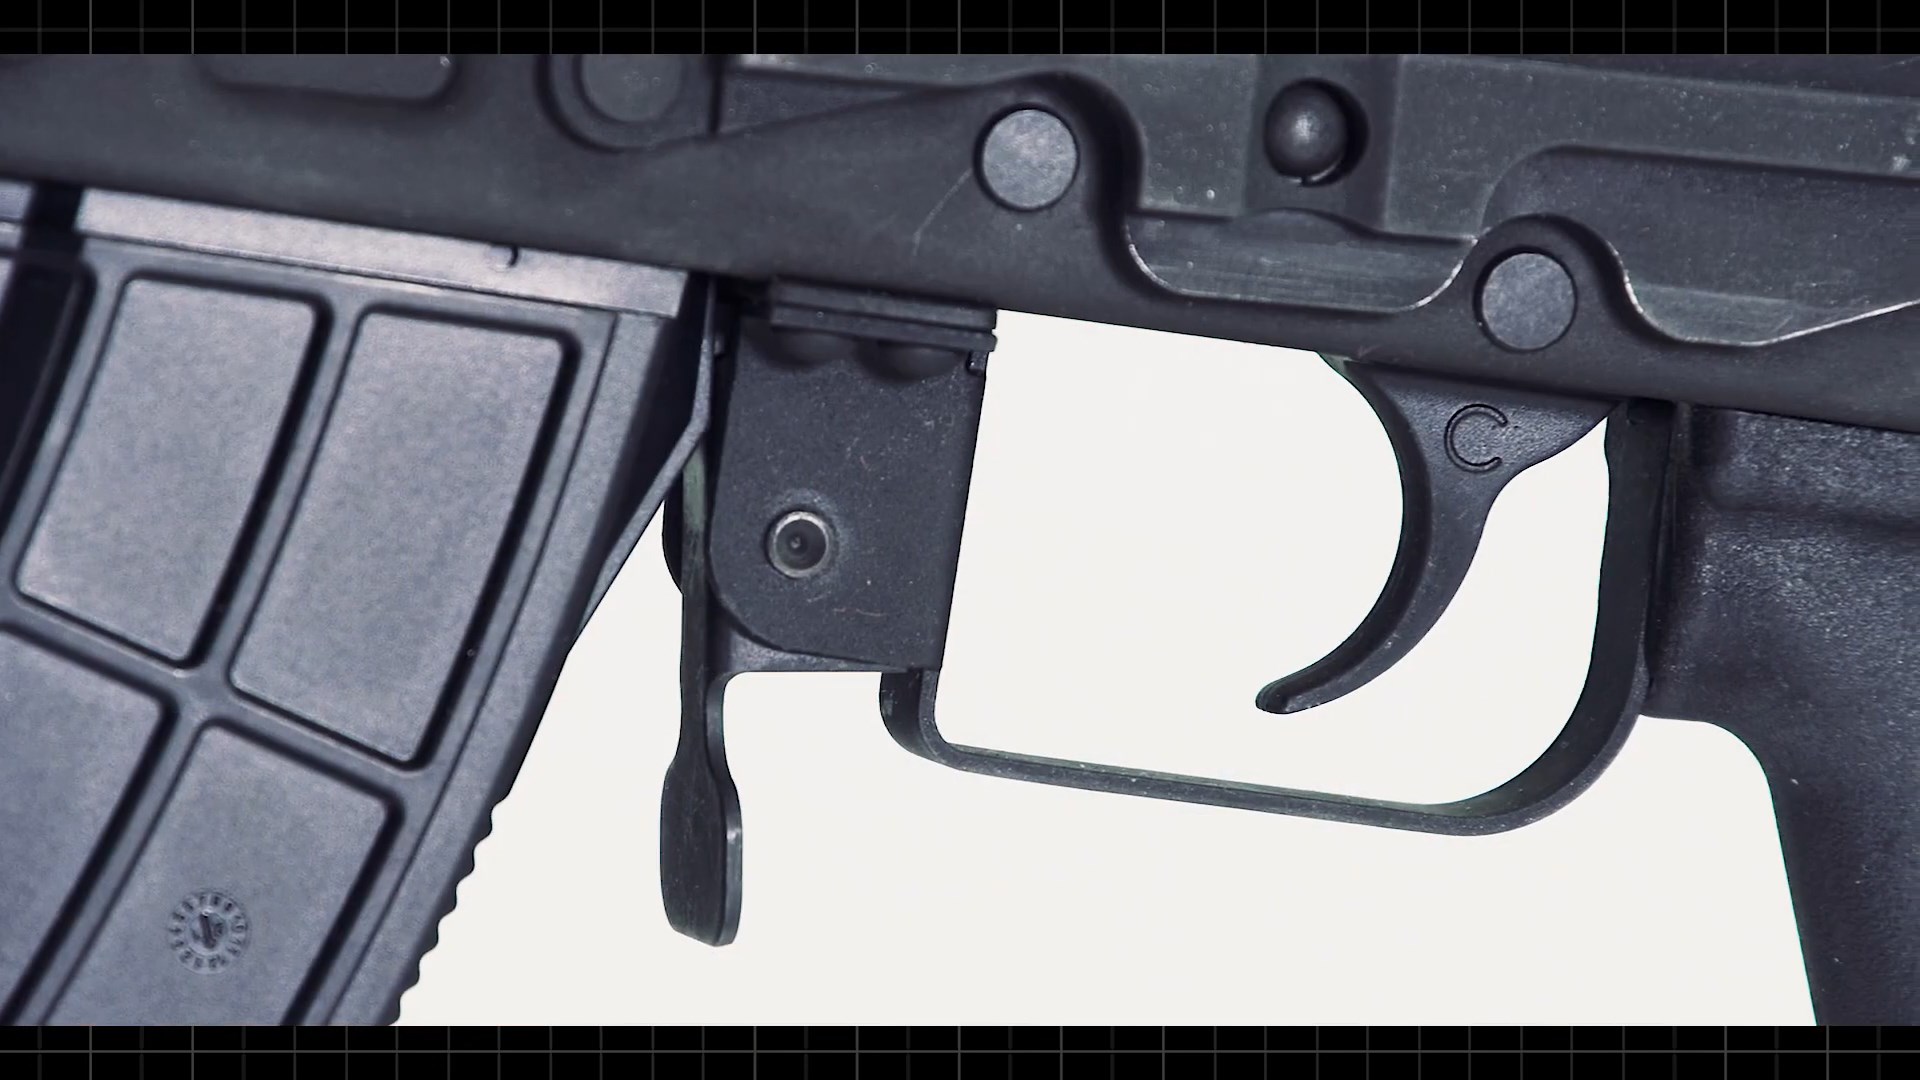 Century Arms BFT47 trigger group recevier magazine closeup gun parts rifle ak47 clone